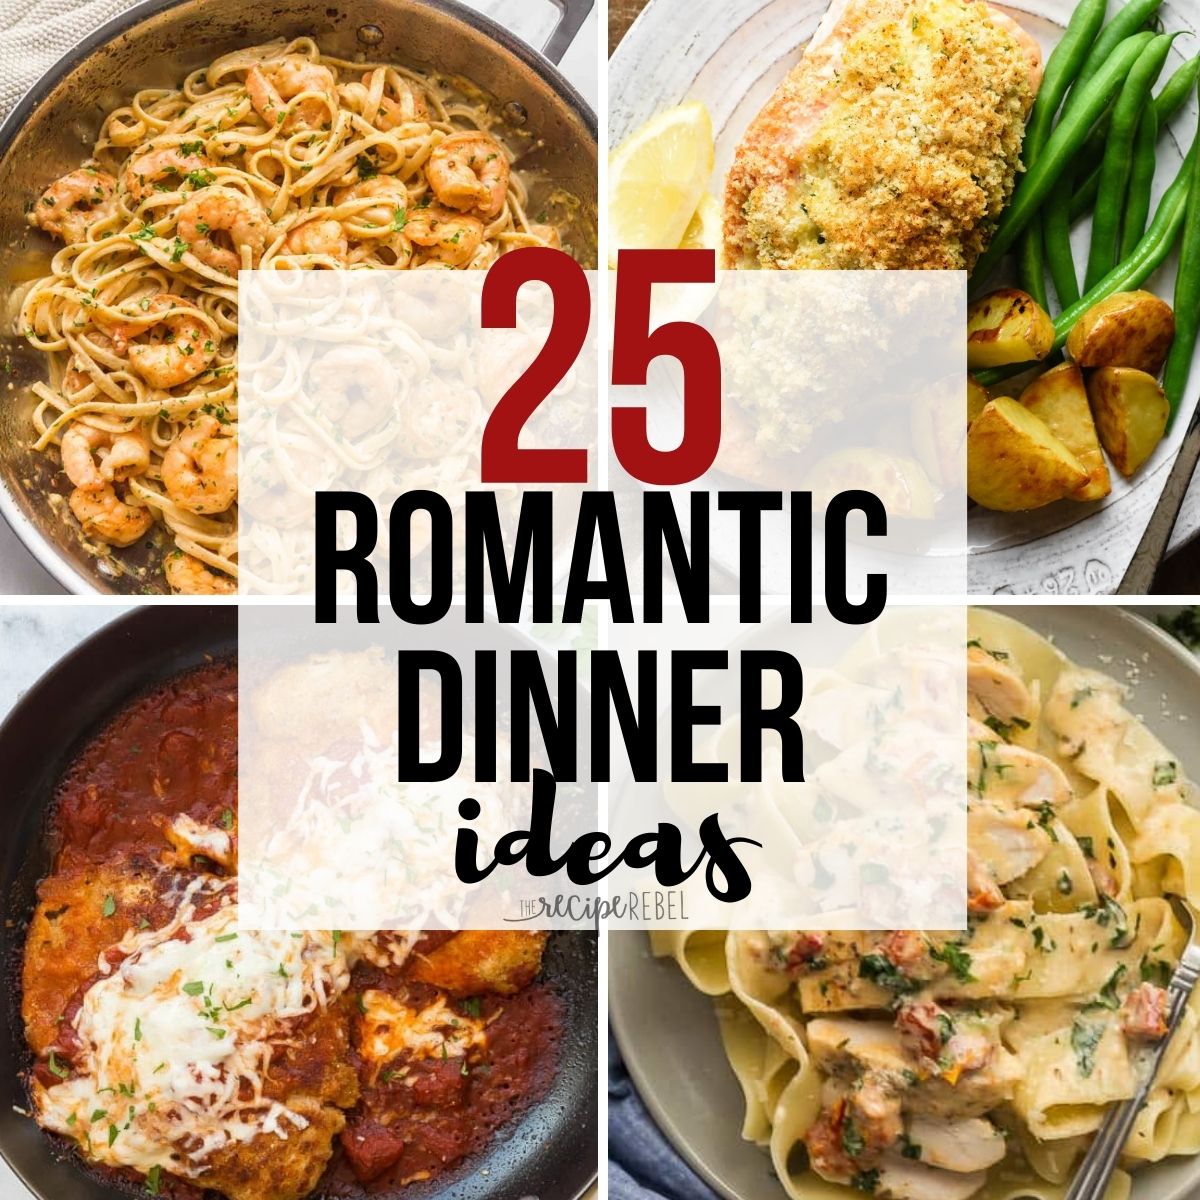 25 Romantic Dinner Ideas | The Recipe Rebel